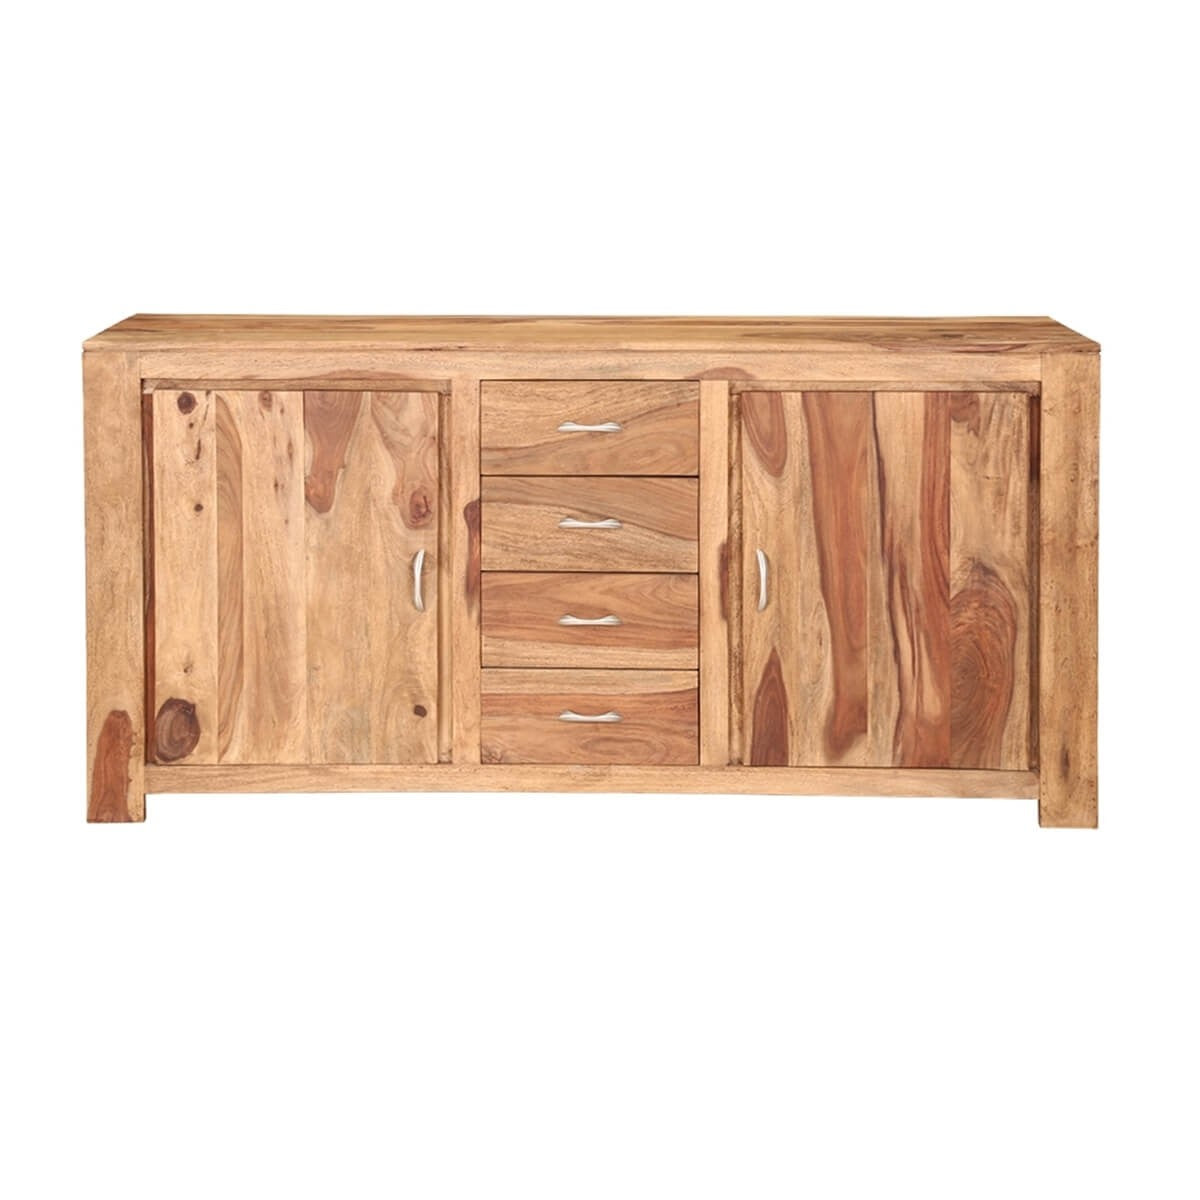 Cromer Indian Solid Wood 4 Drawer Large Sideboard Cabinet